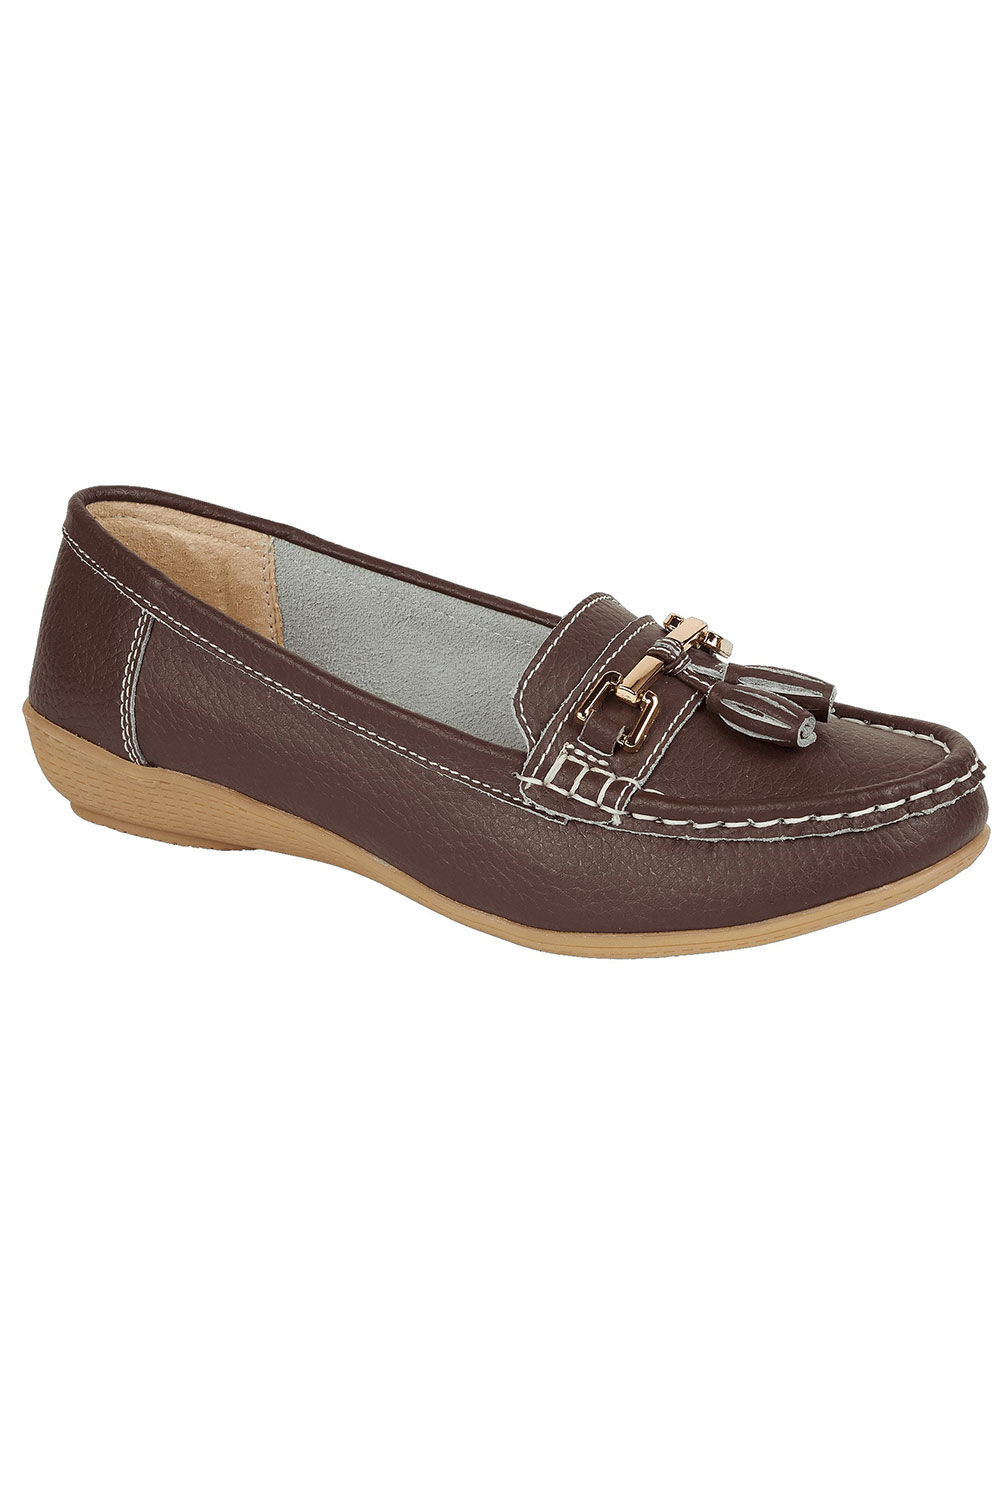 Jo & Joe Women’s Brown Leather Moccasin Shoes with Tassel Detail, Size: 5